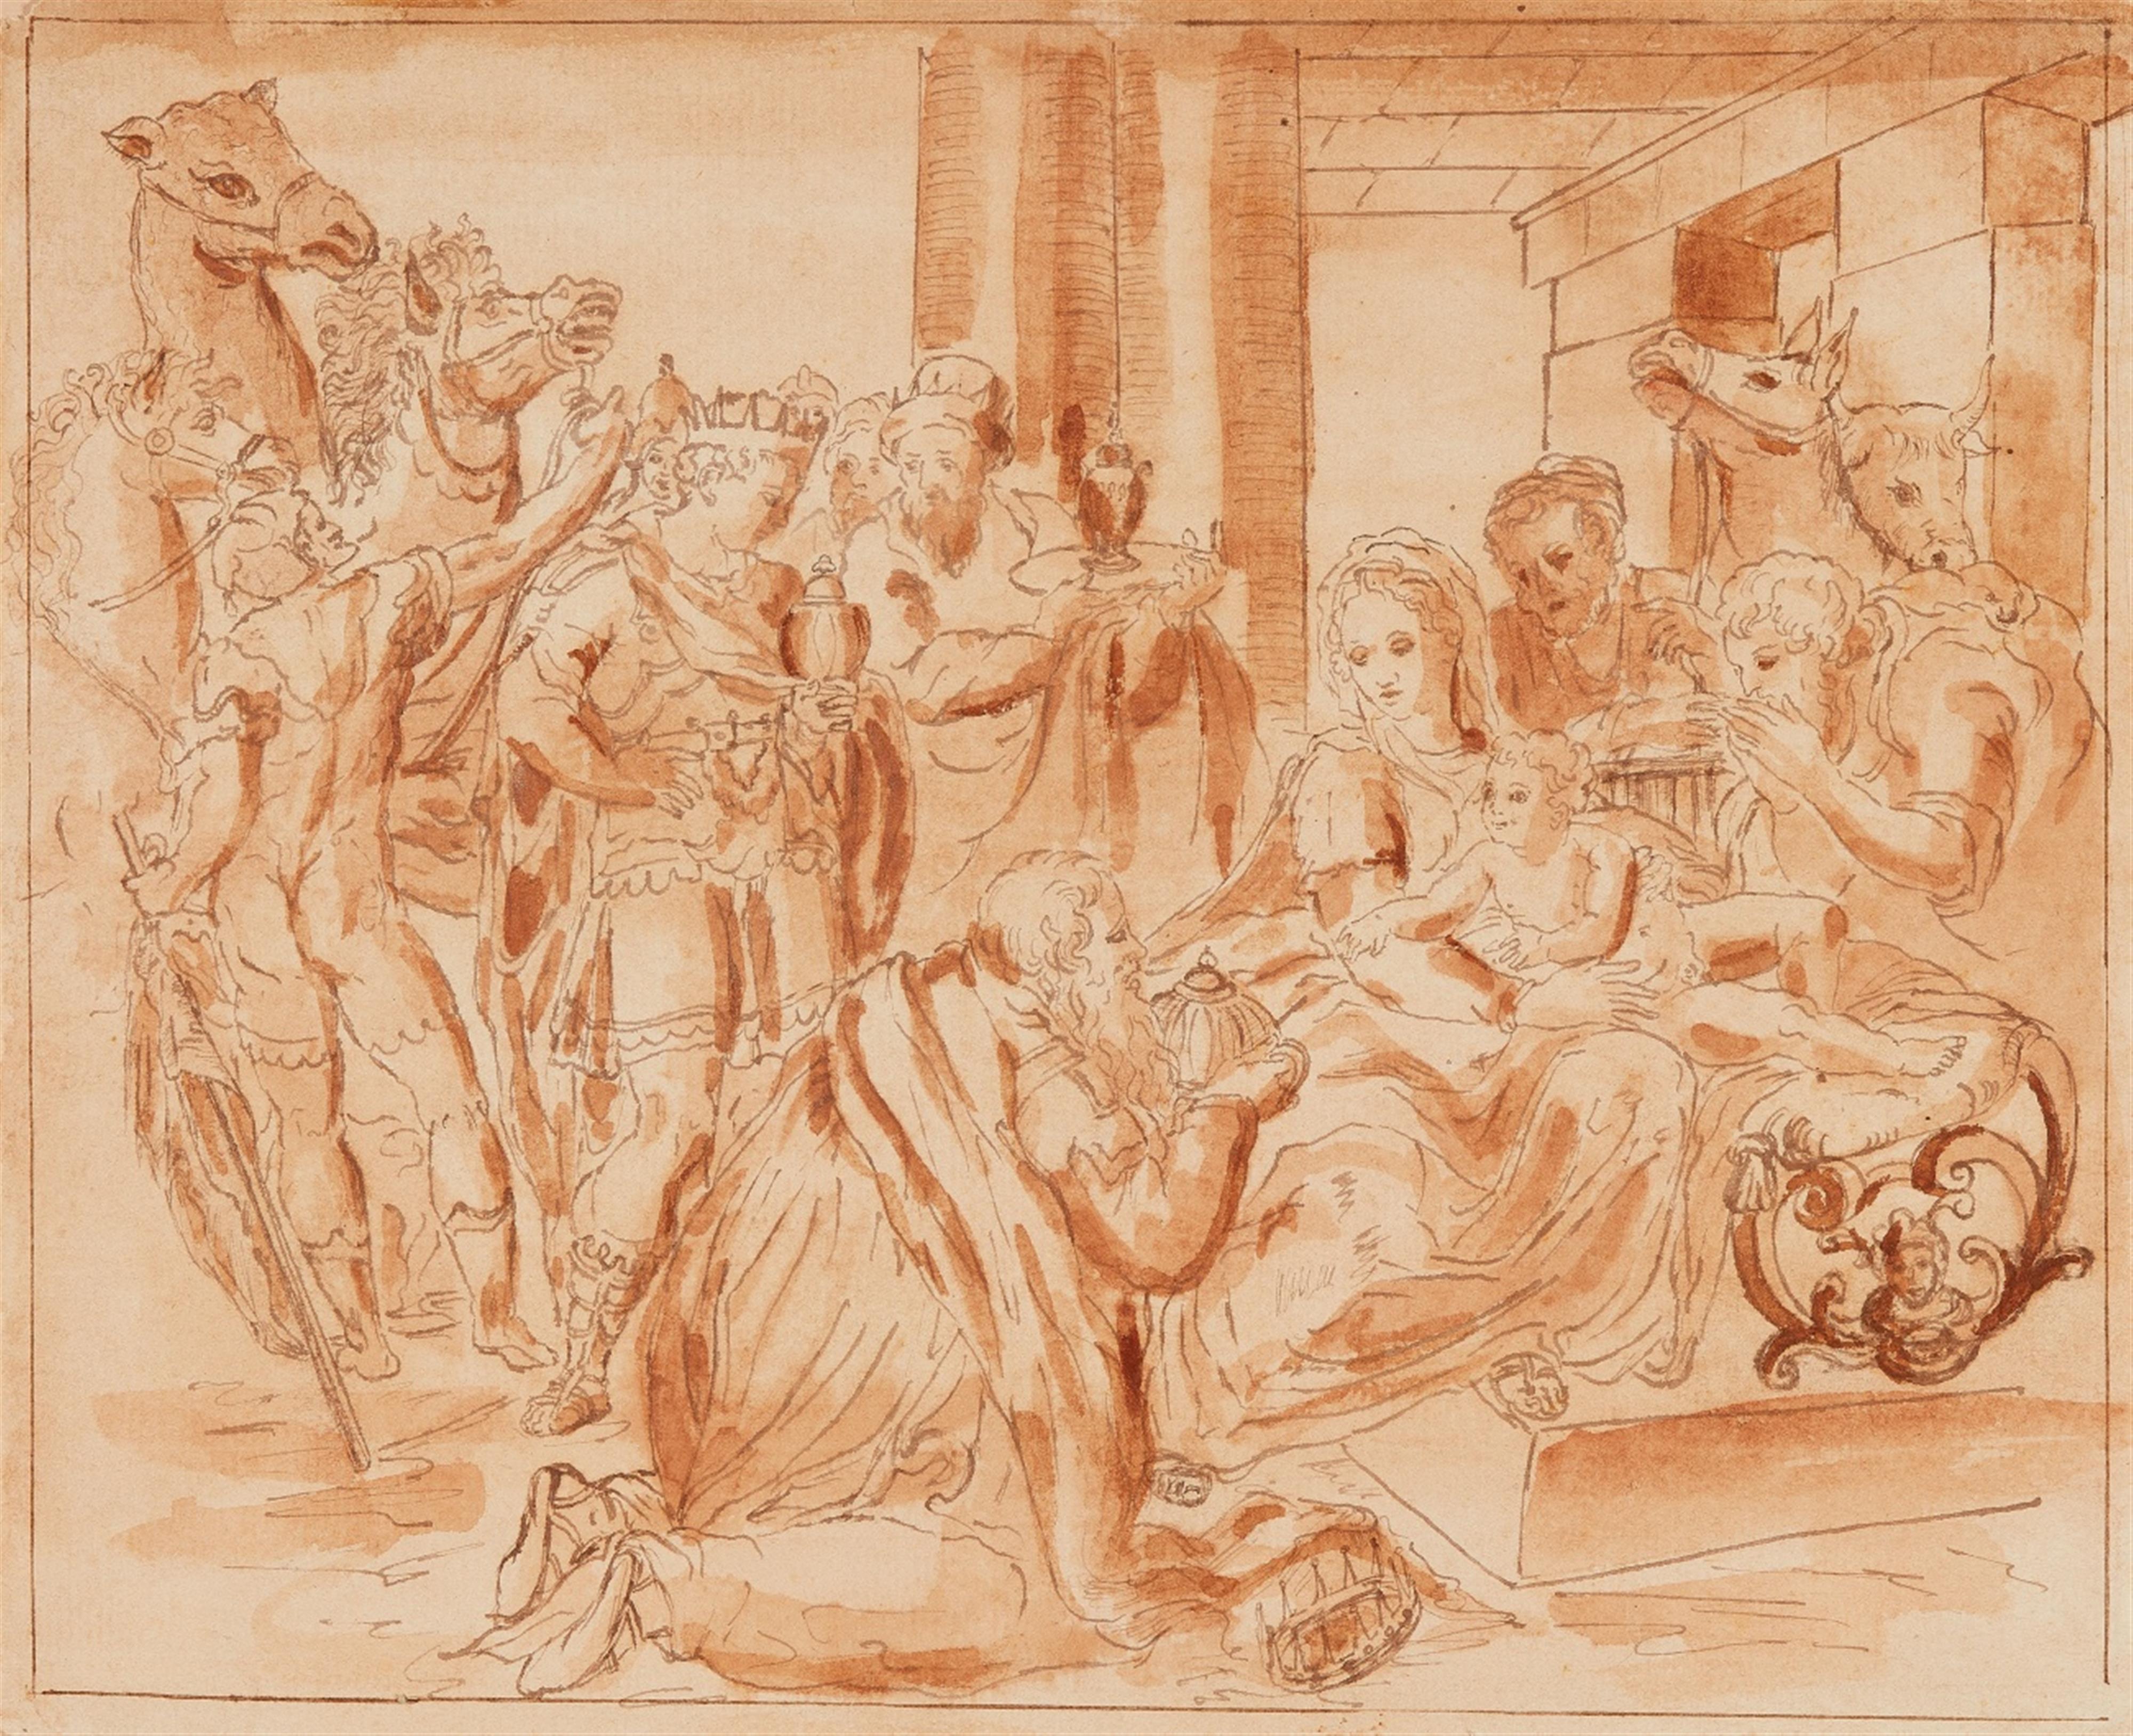 Venetian School 18th century - The Adoration of the Magi - image-1